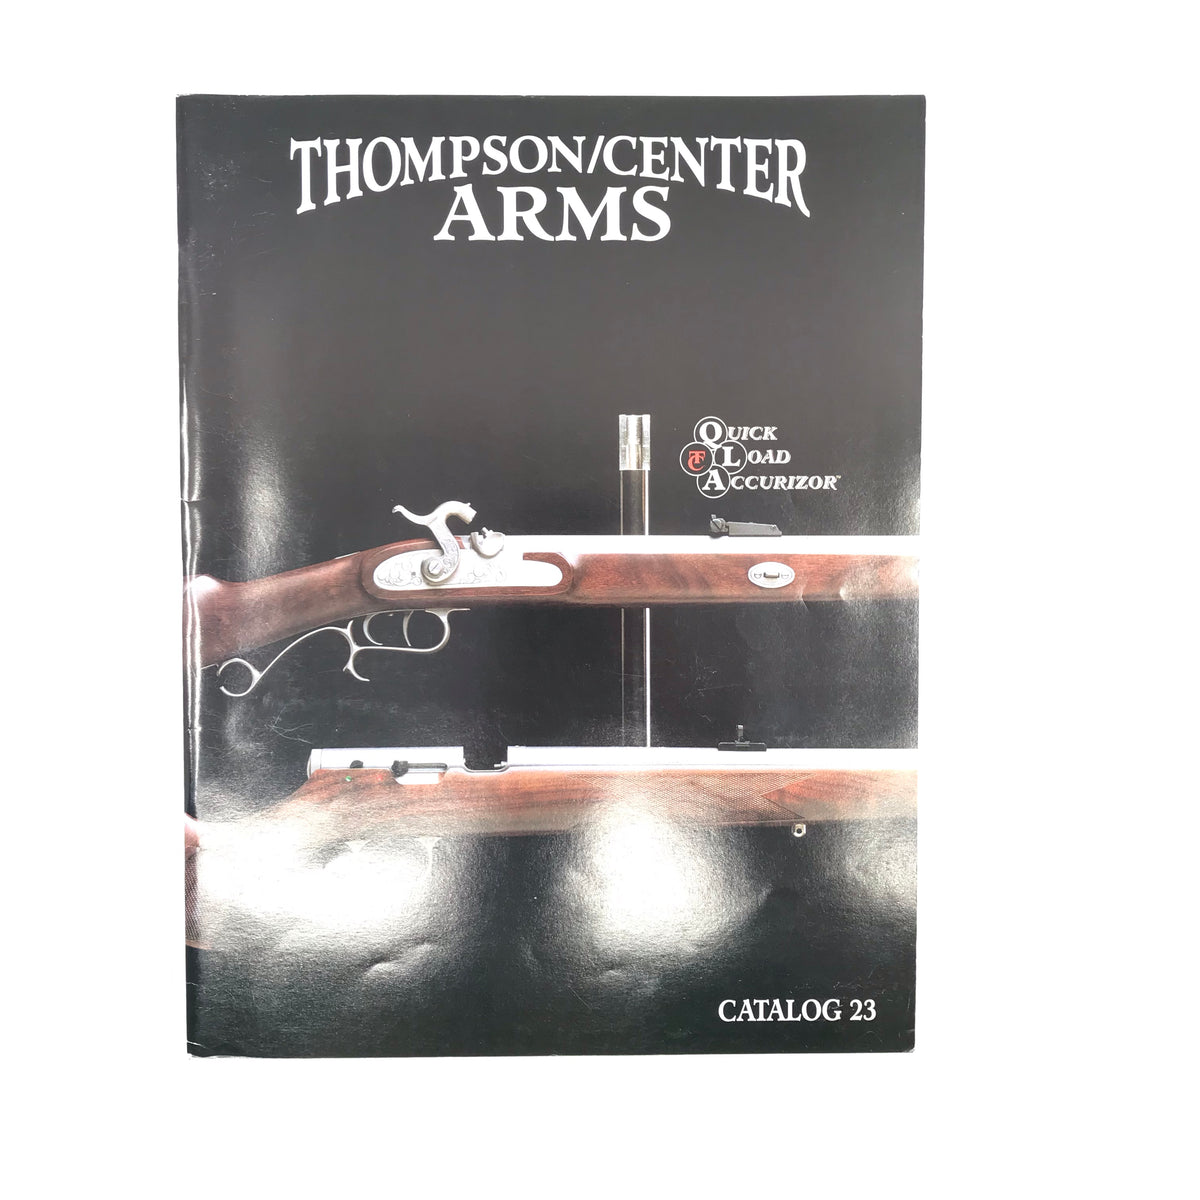 Thompson/Center Arms Catalog 23 (1996)